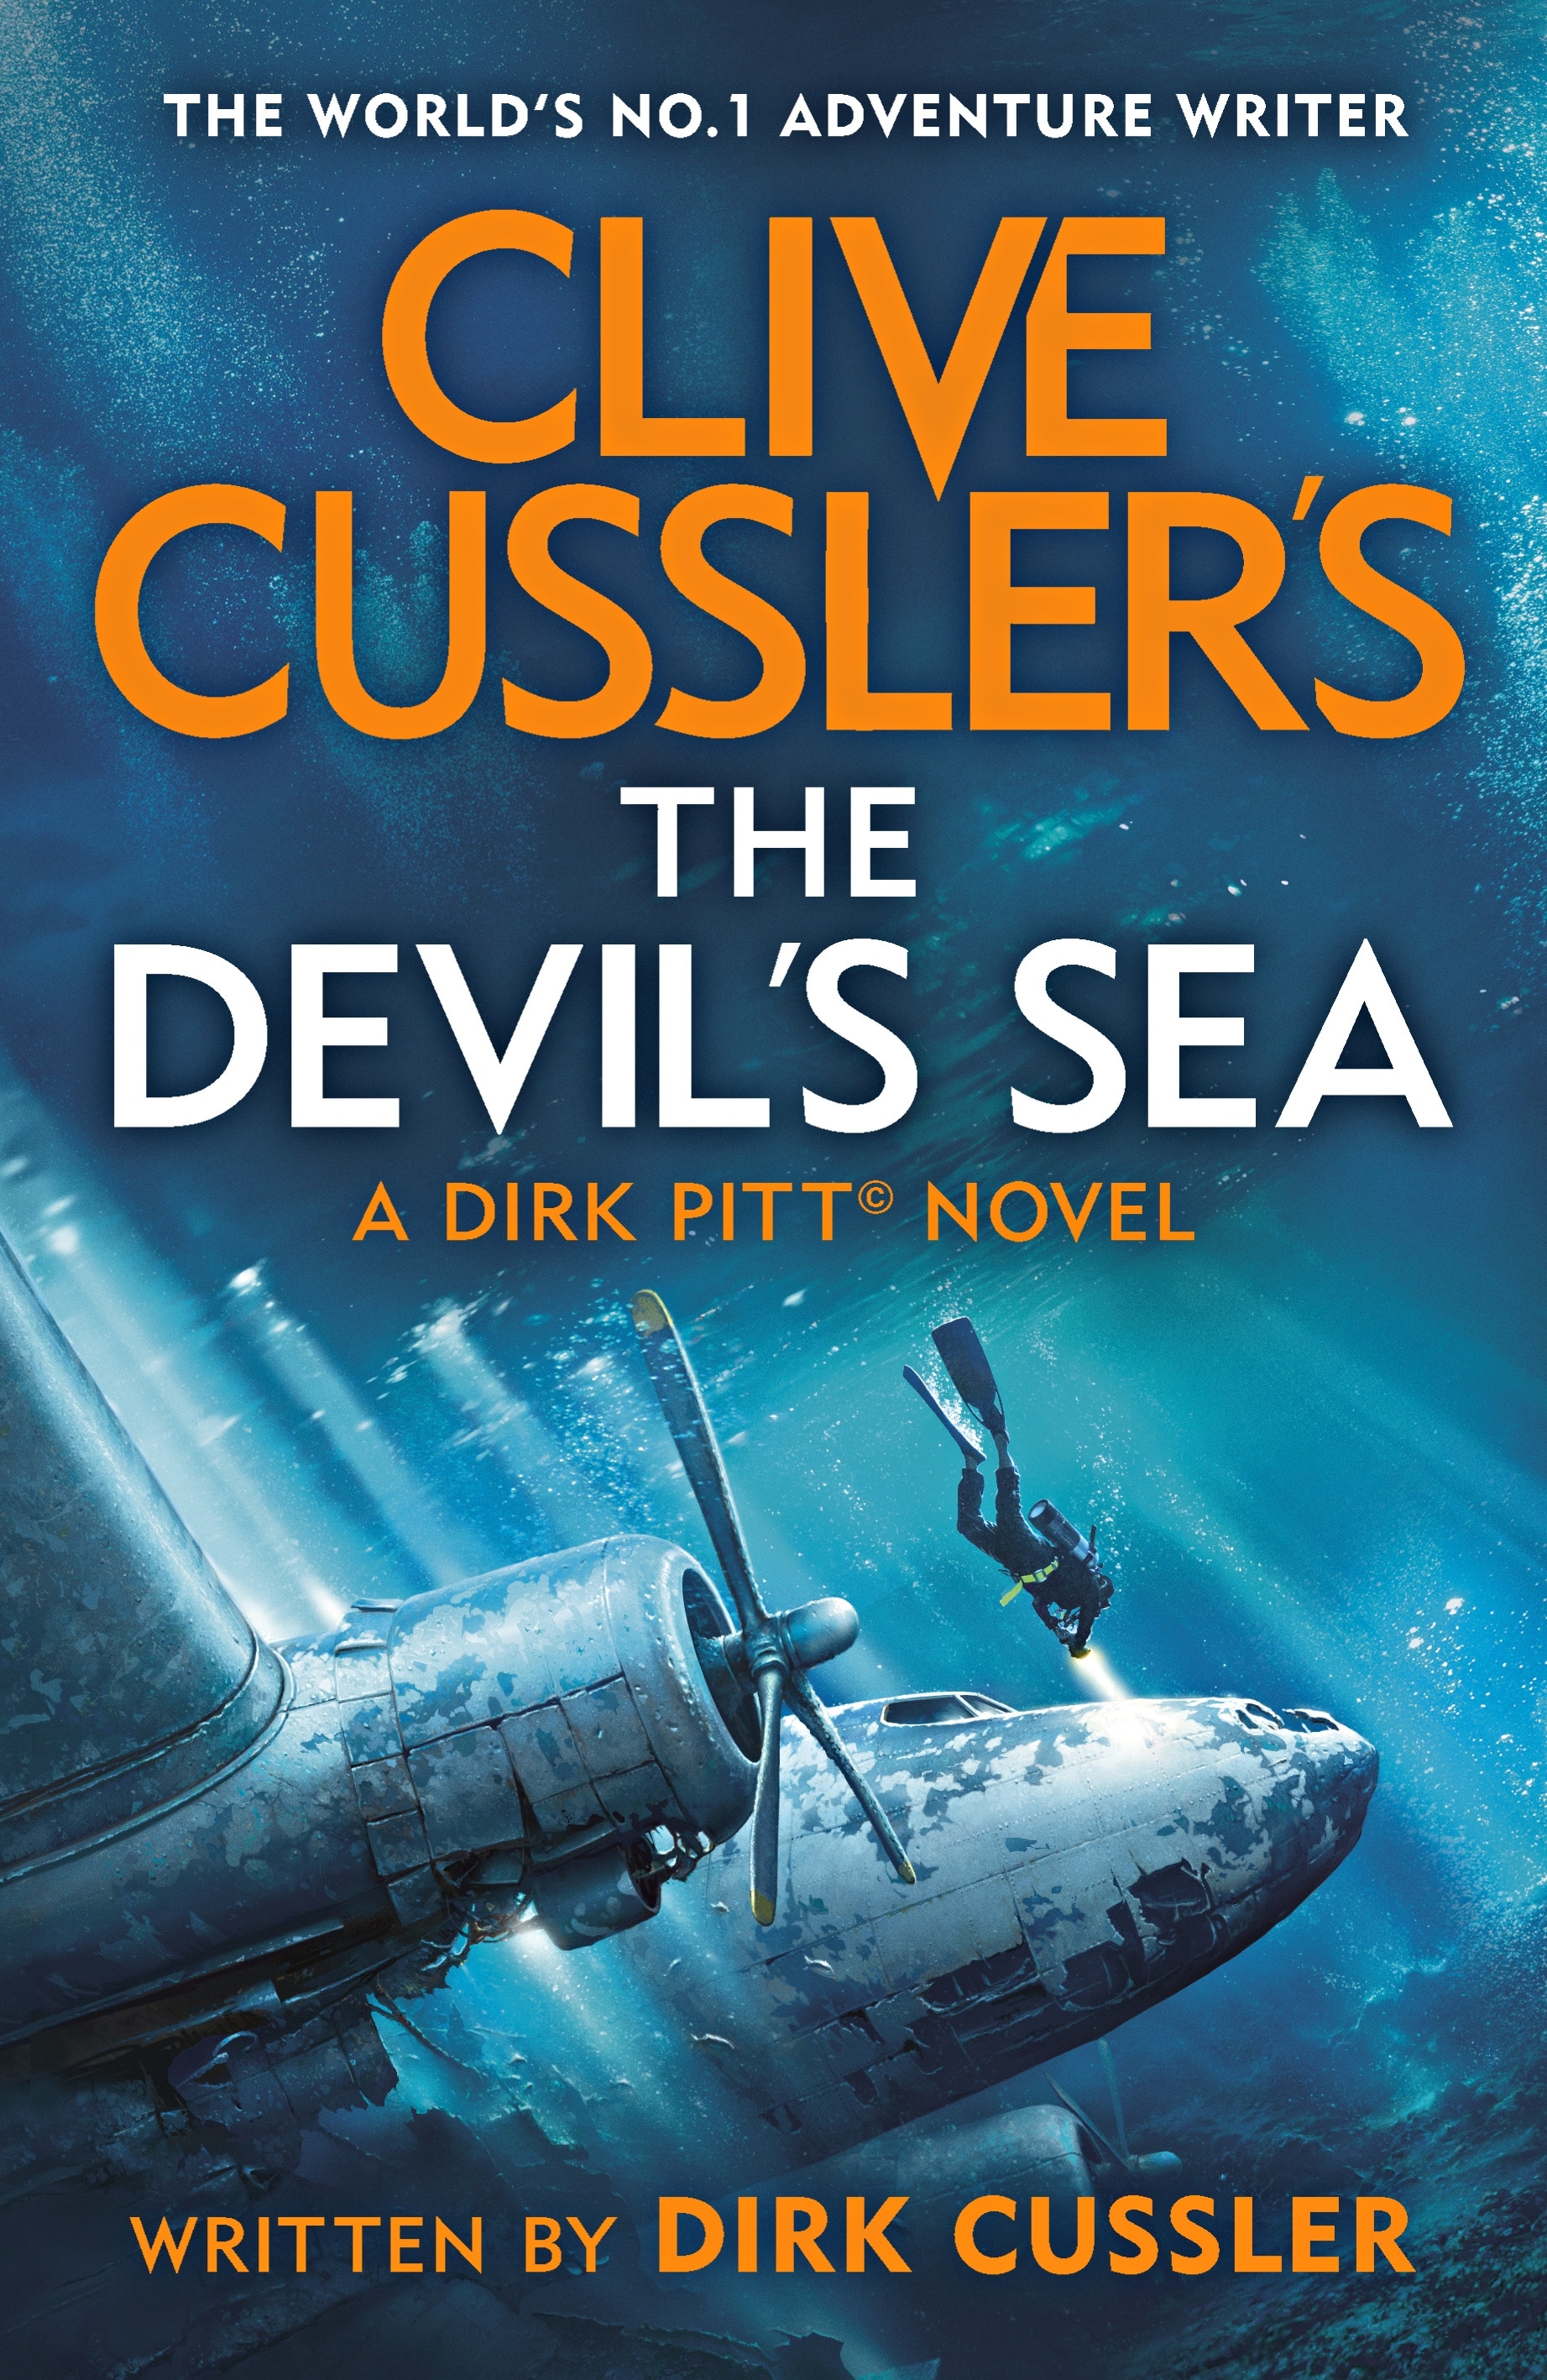 Book “Clive Cussler's The Devil's Sea” by Dirk Cussler — November 11, 2021